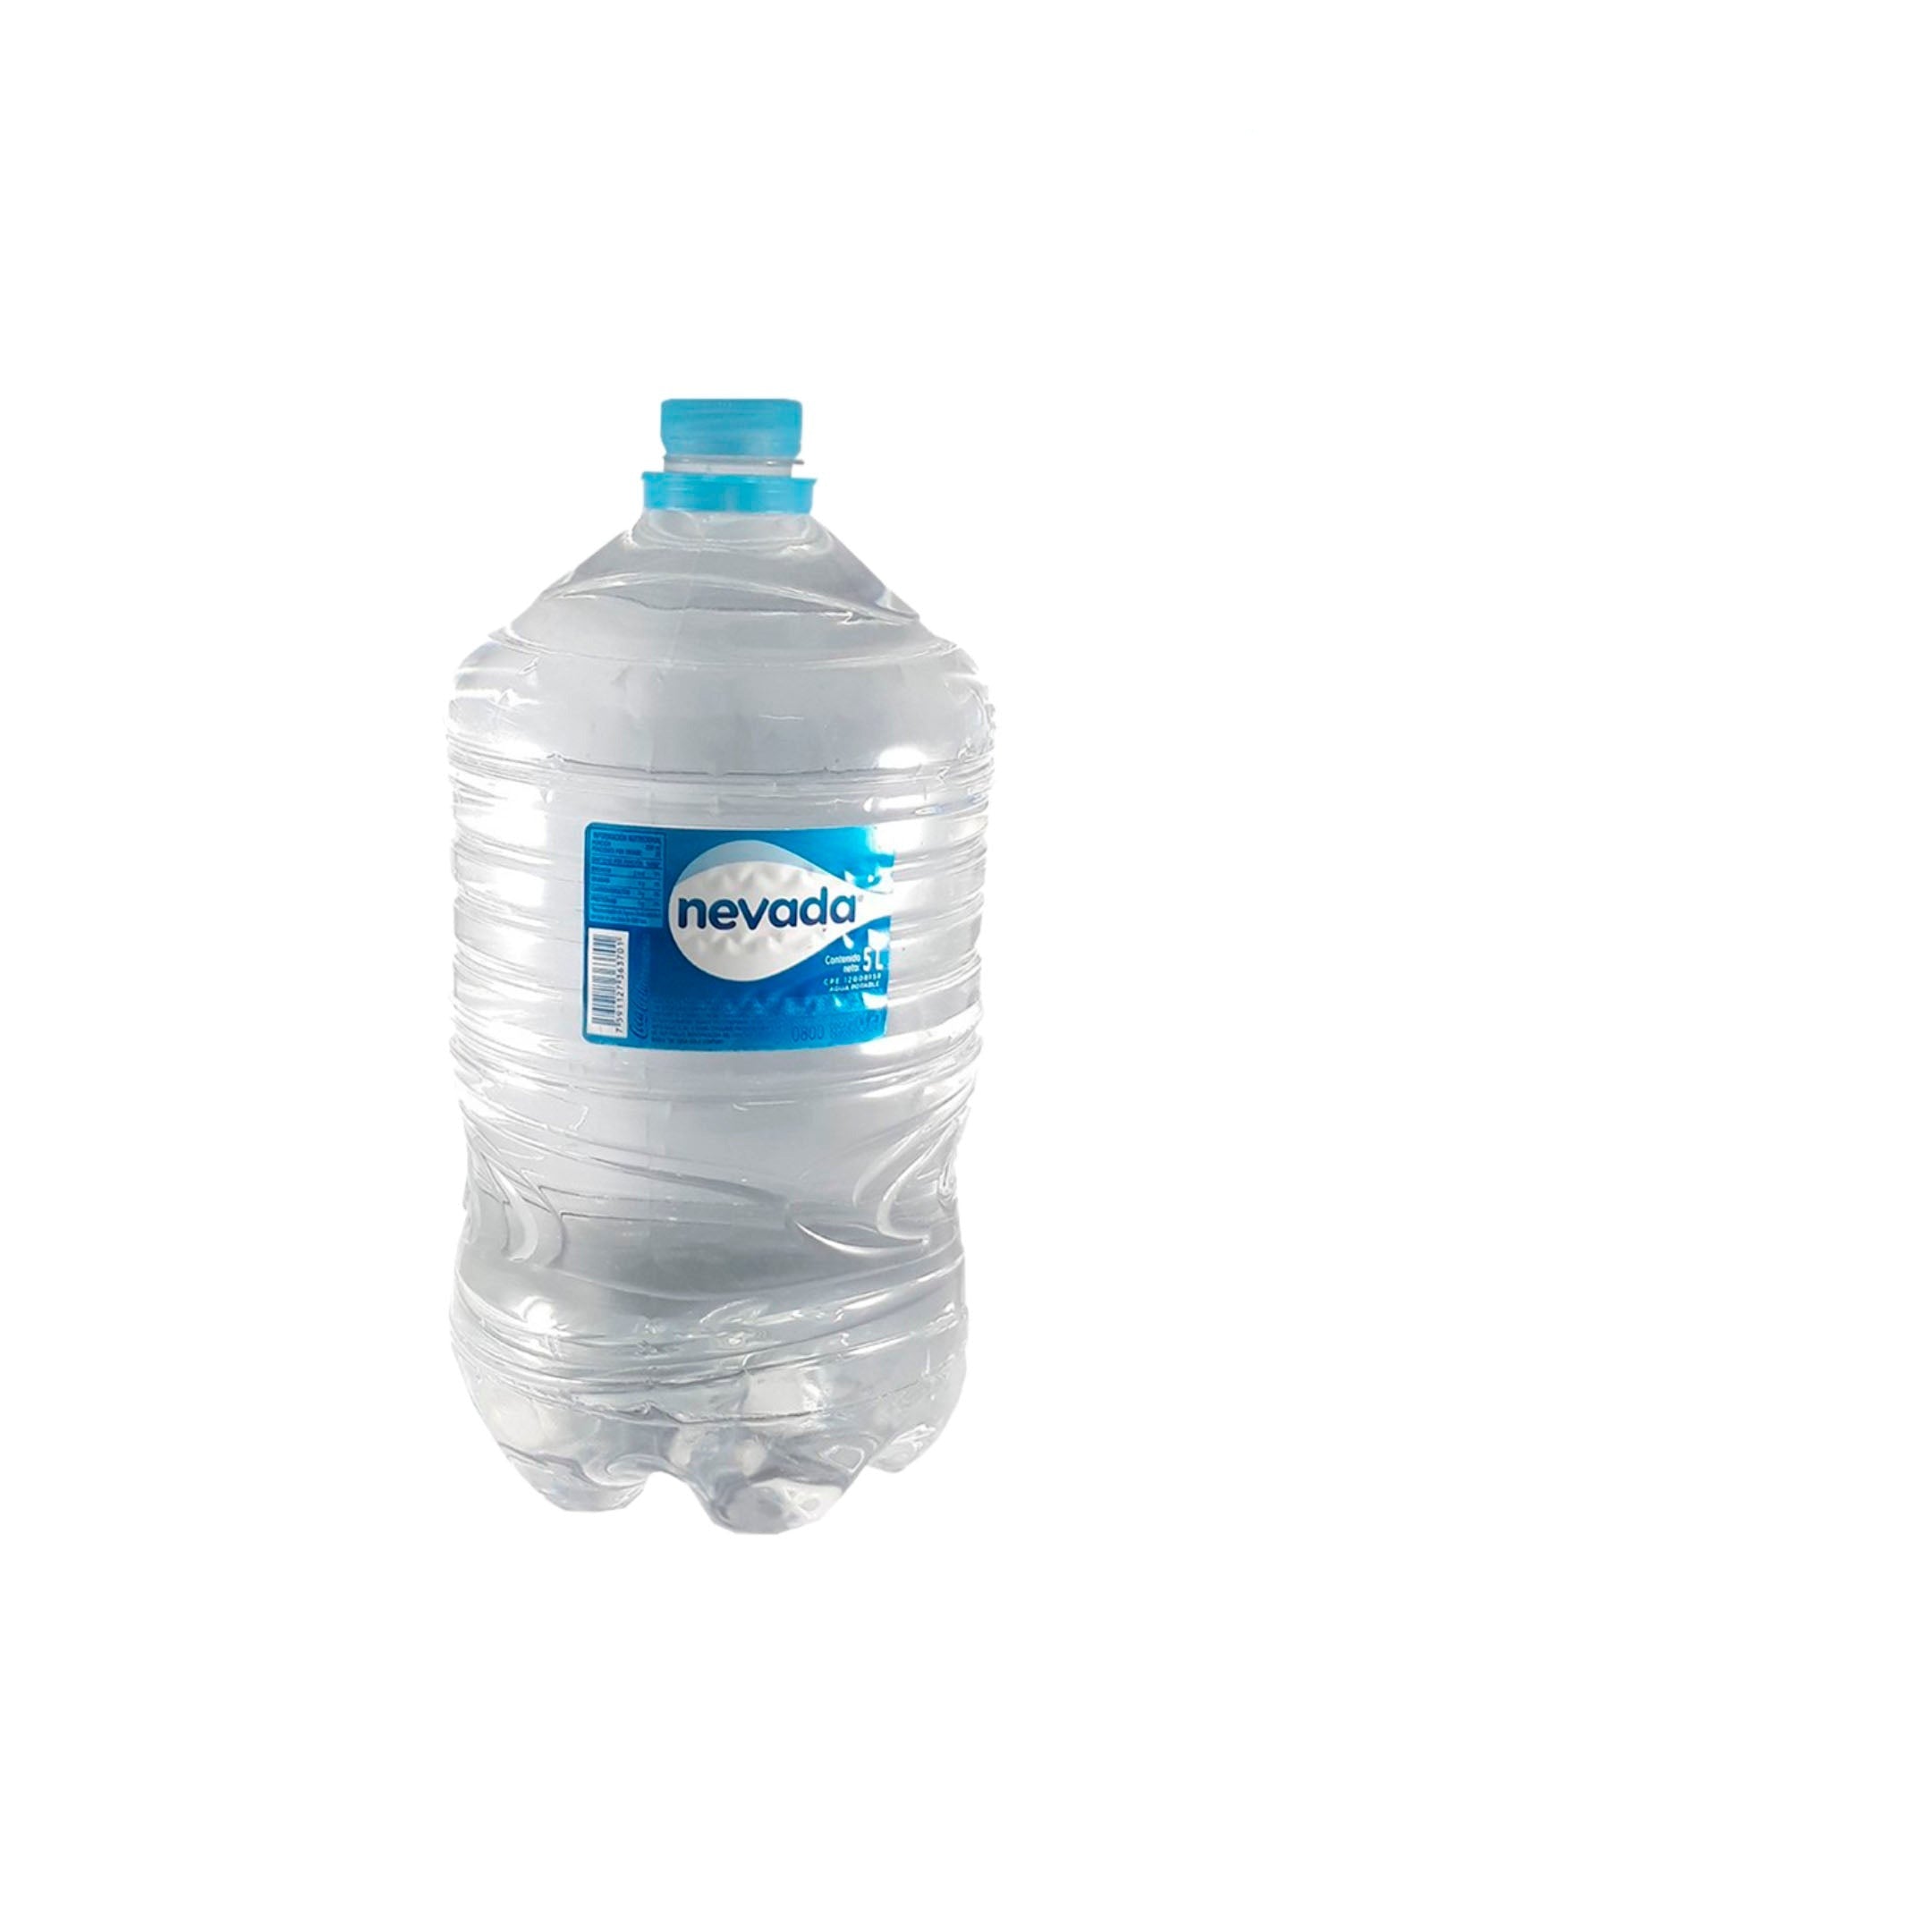 Aqua Nevada 8 litros – Aigua Viva Valencia